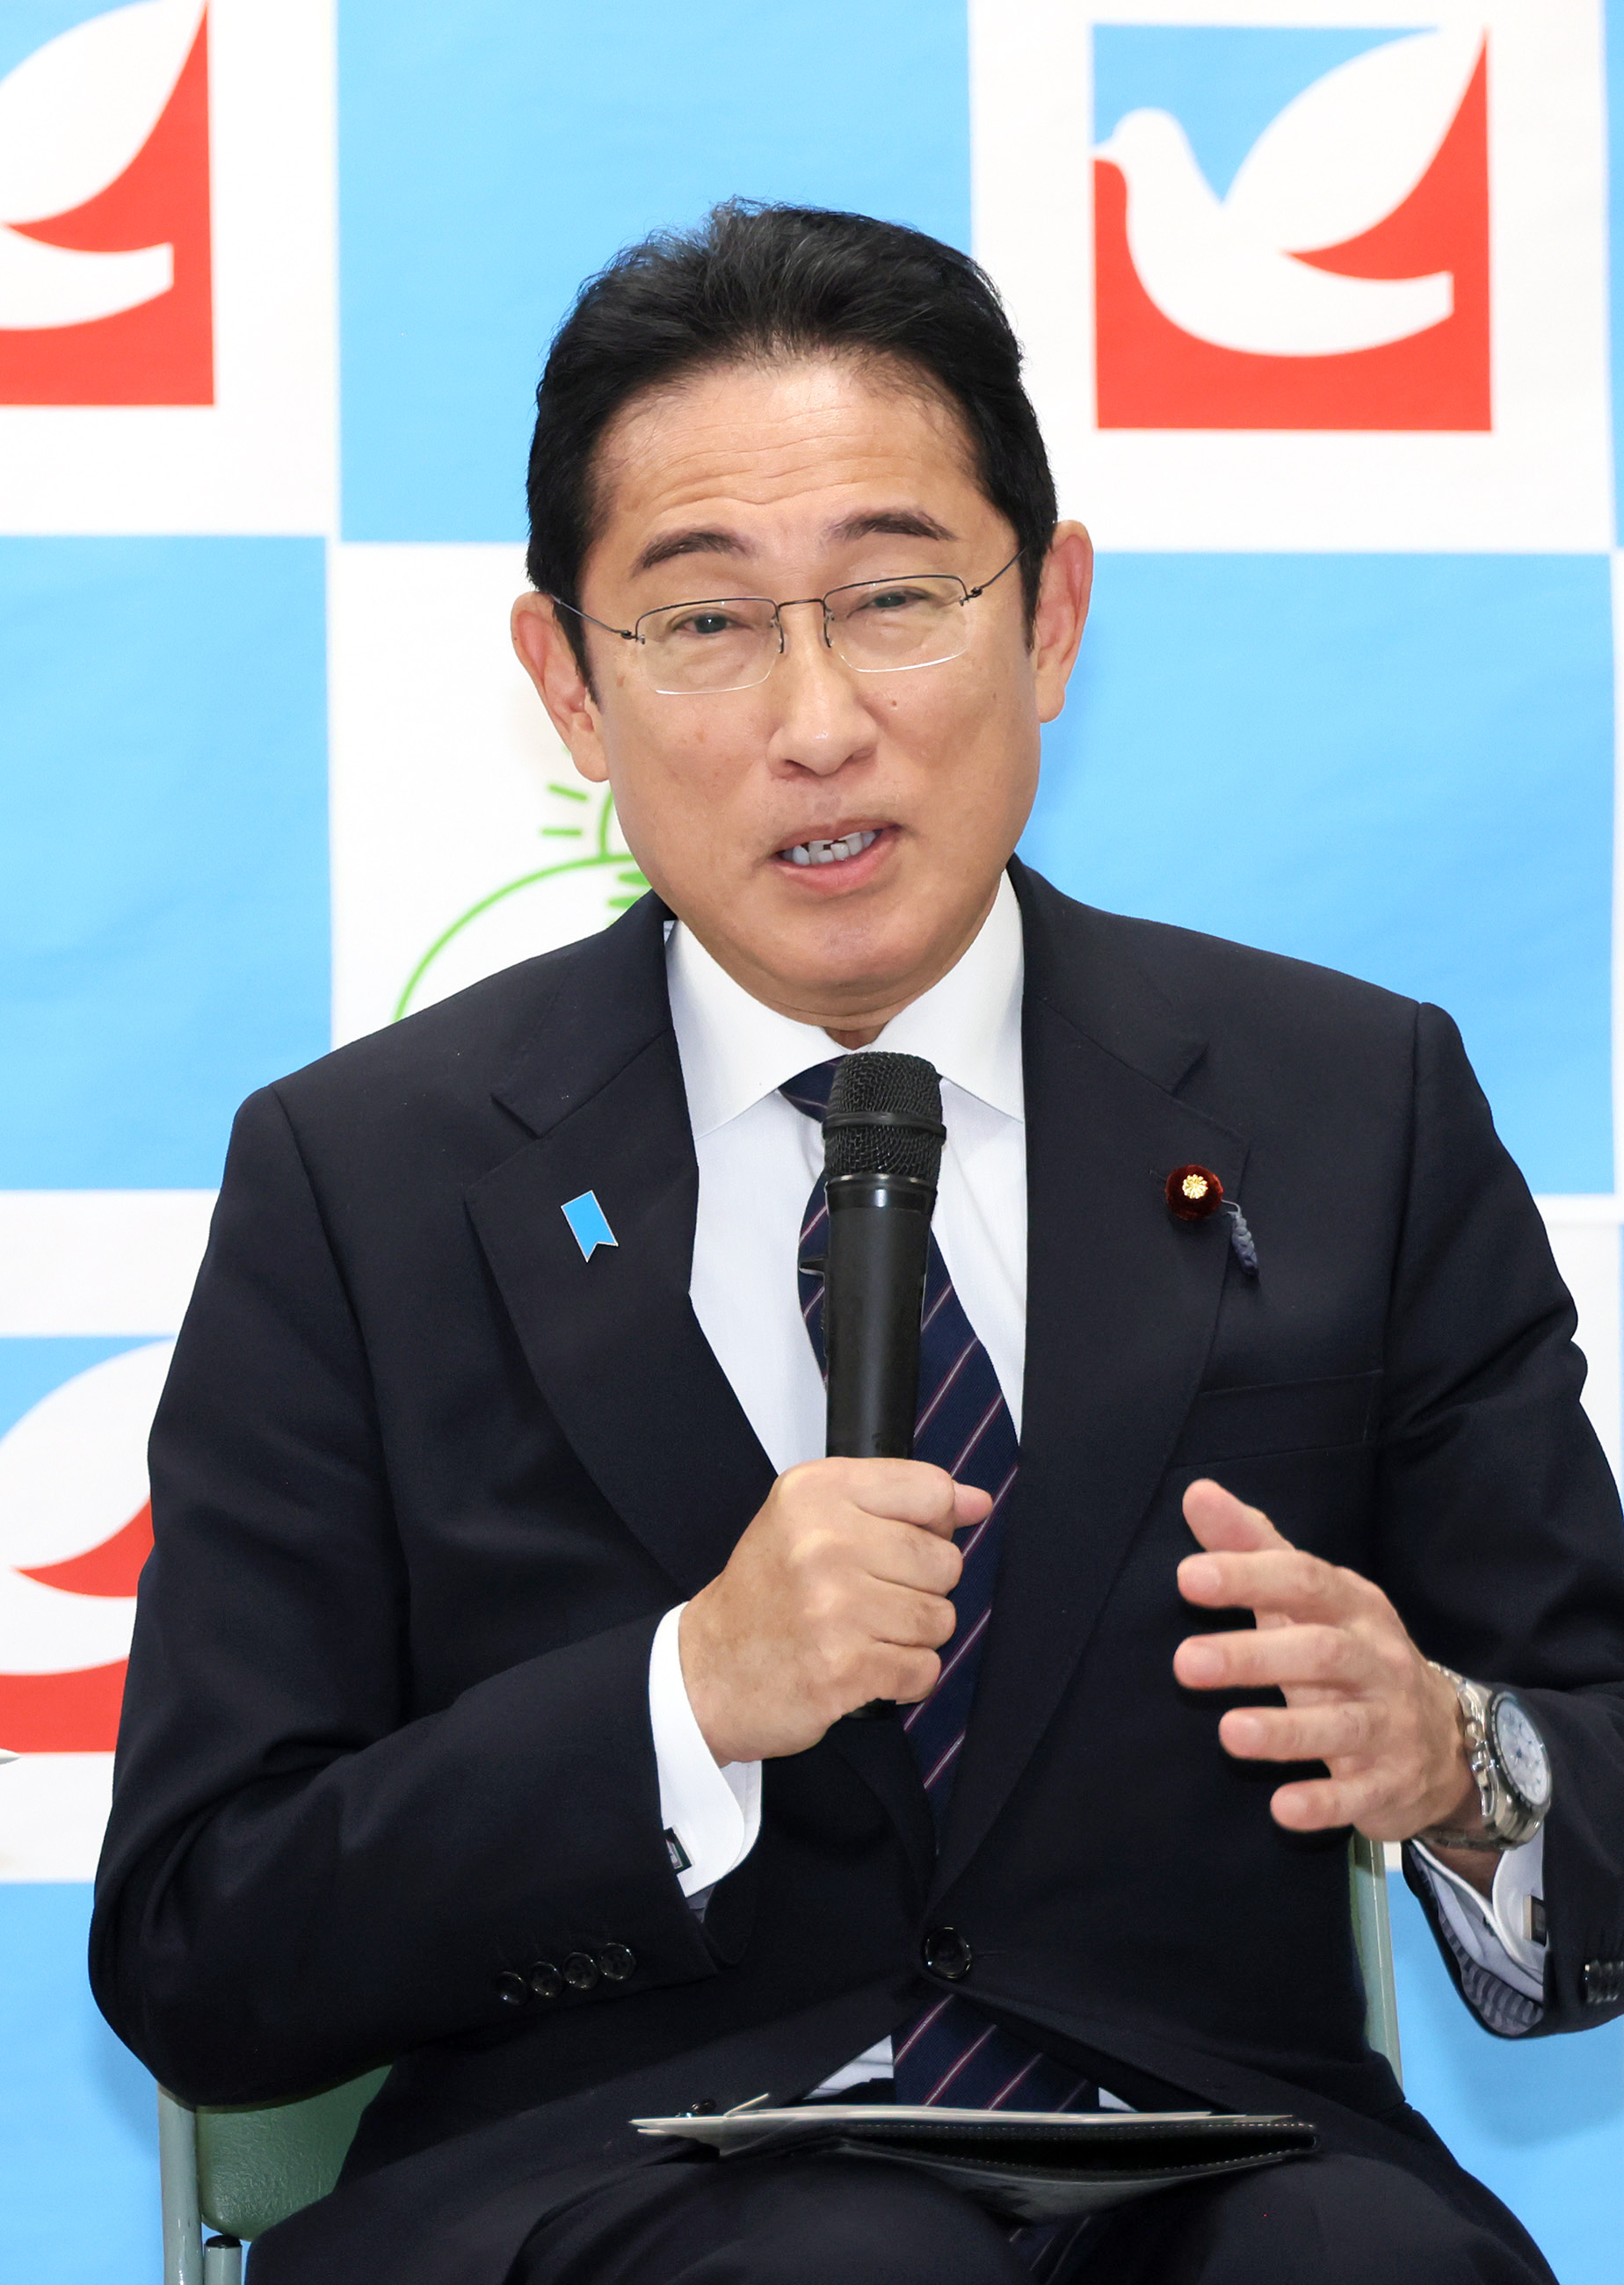 Prime Minister Kishida speaking at the small group talk (2)